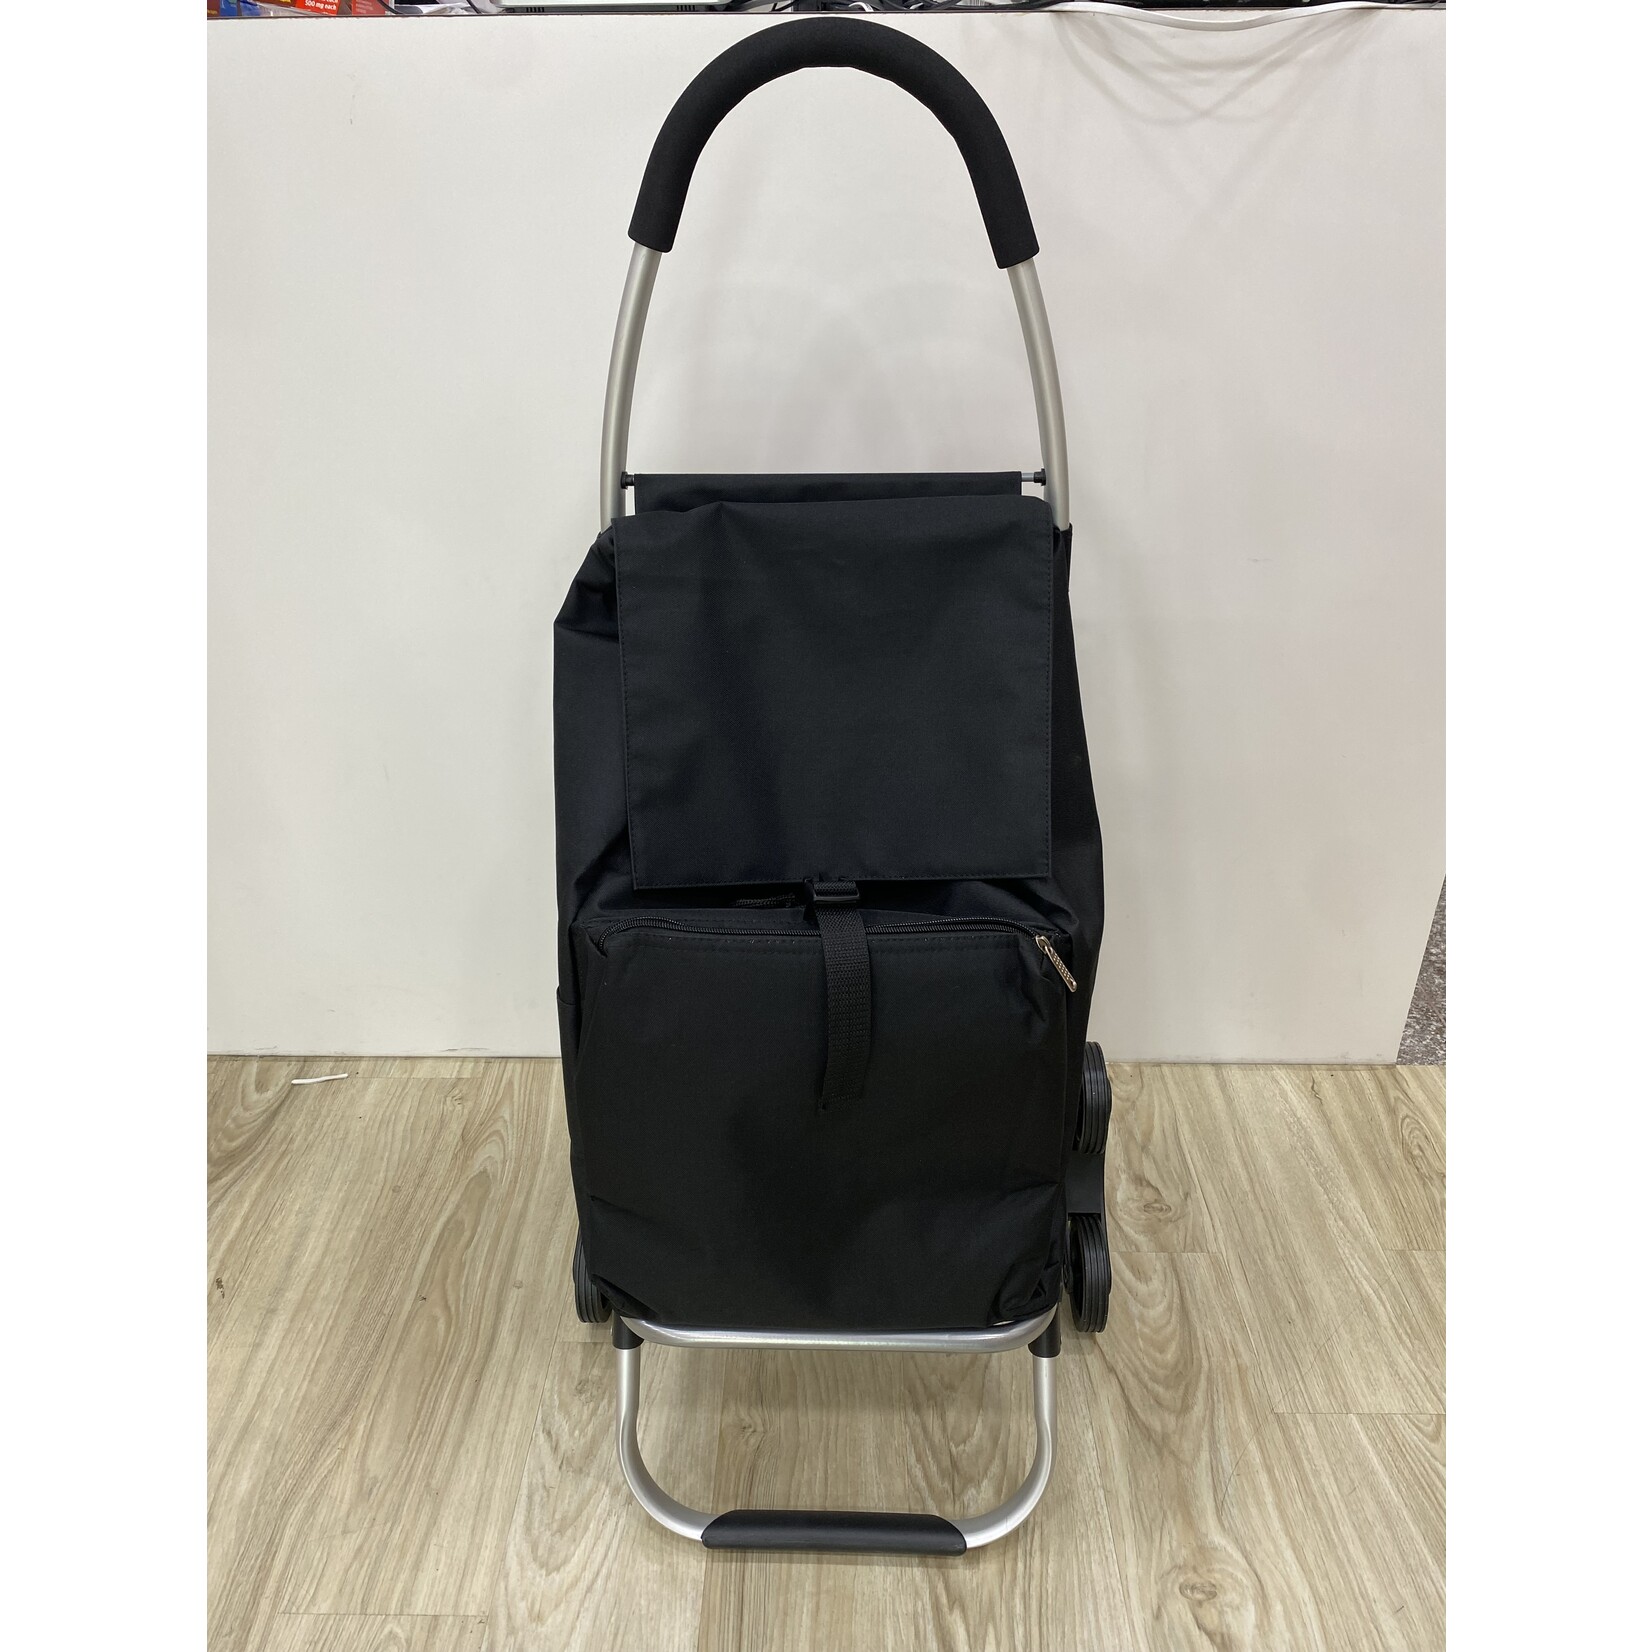 Kiffler - Utility Bag Cart (BLACK)